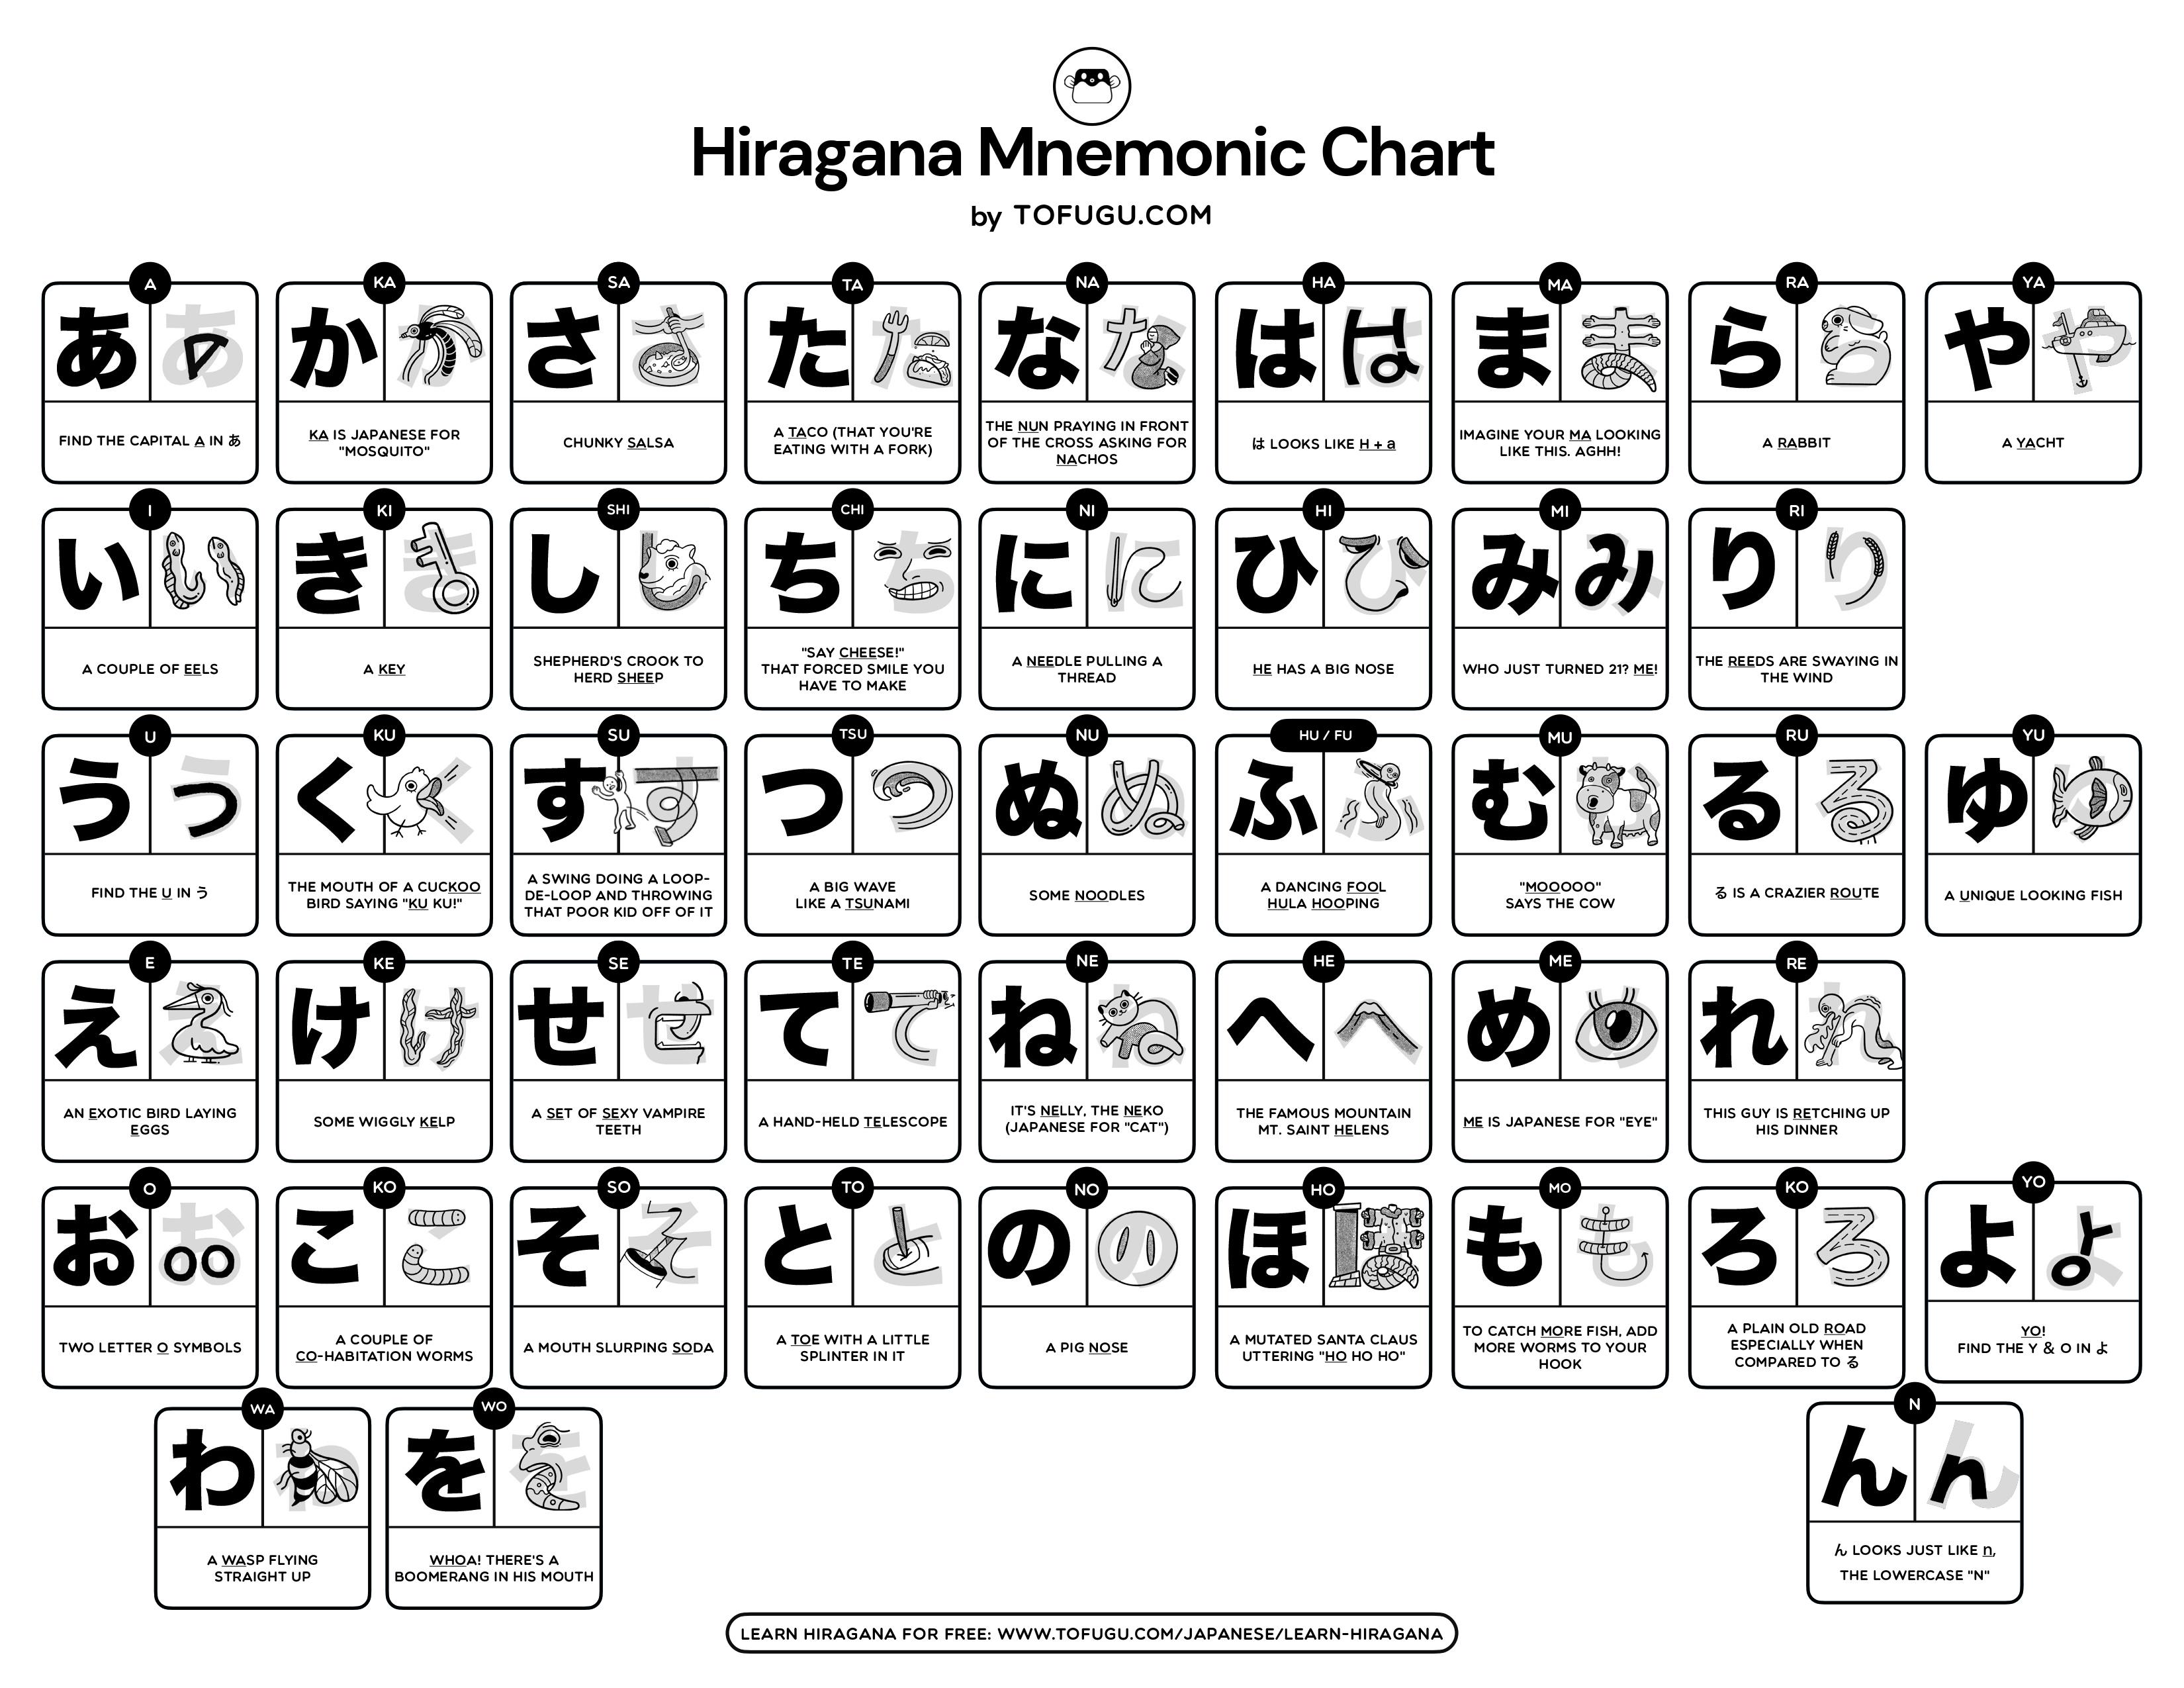 Japanese Writing Workbook: Syllabary Hiragana Katakana Practice Worksheet, Graph Paper, Blank Book Handwriting Practice Sheet, Language Learing ,Study and Writing [Book]